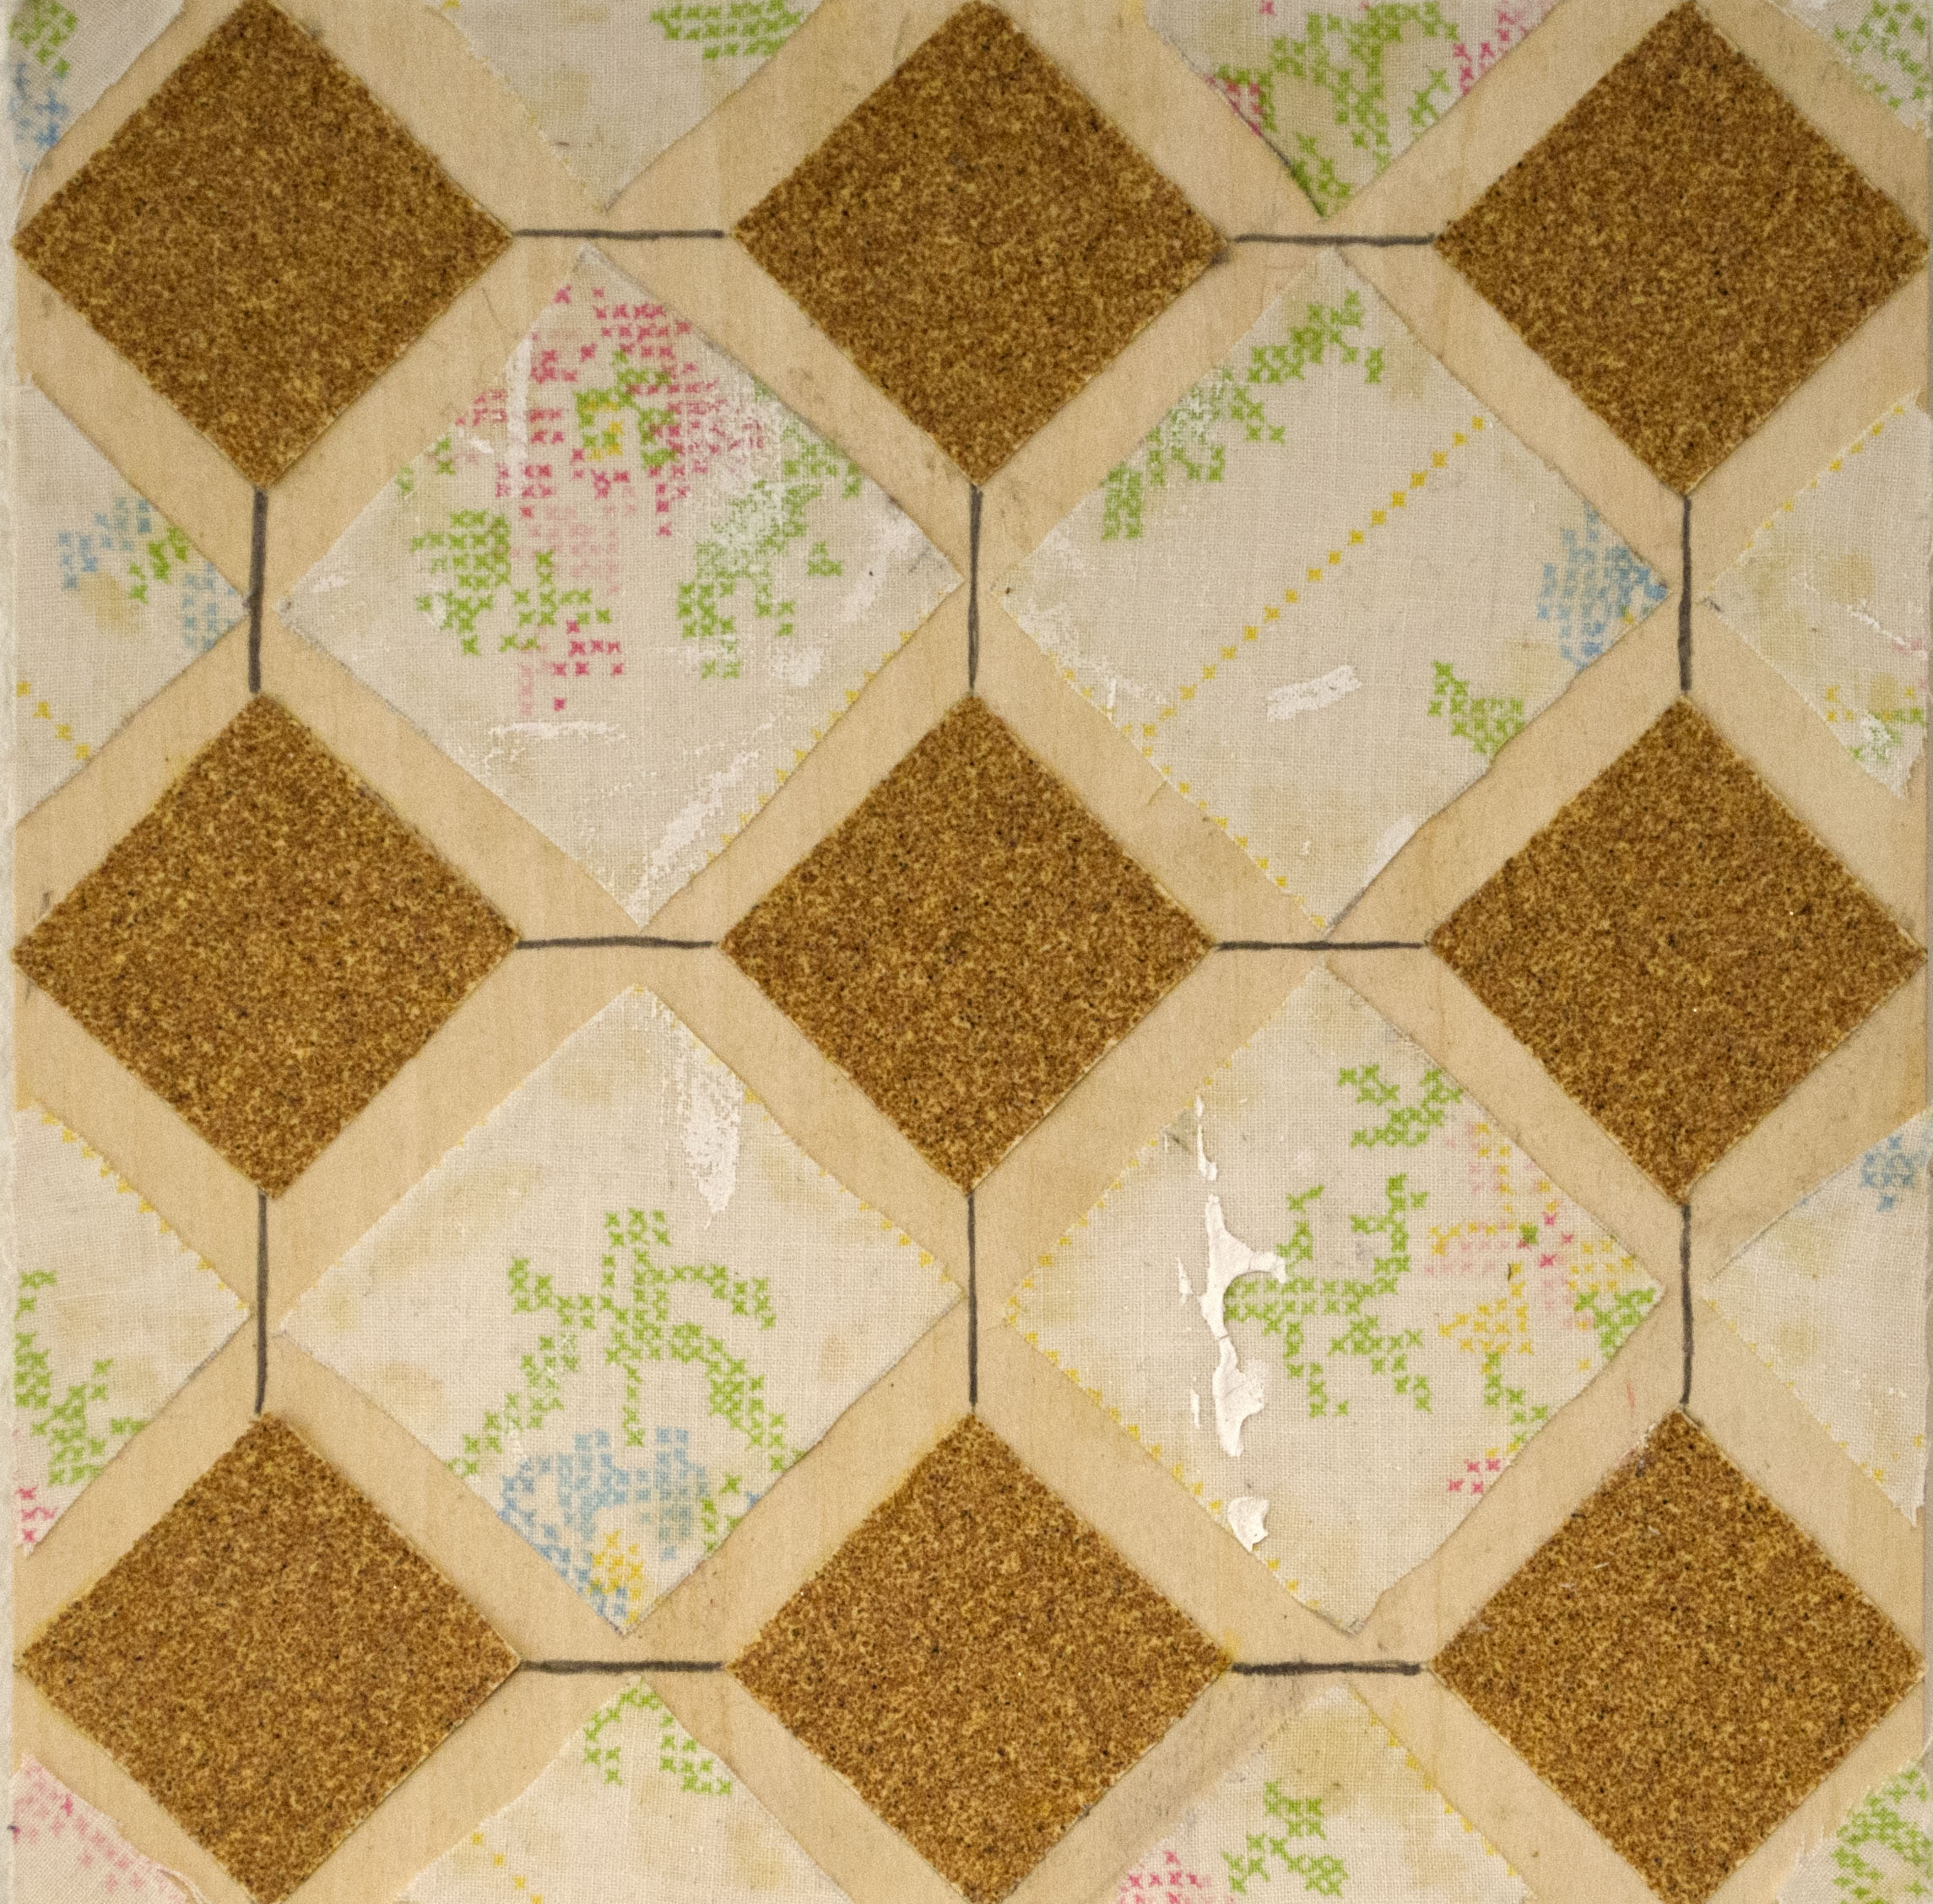 Sandpaper and Bedsheet/Dropcloth Tile